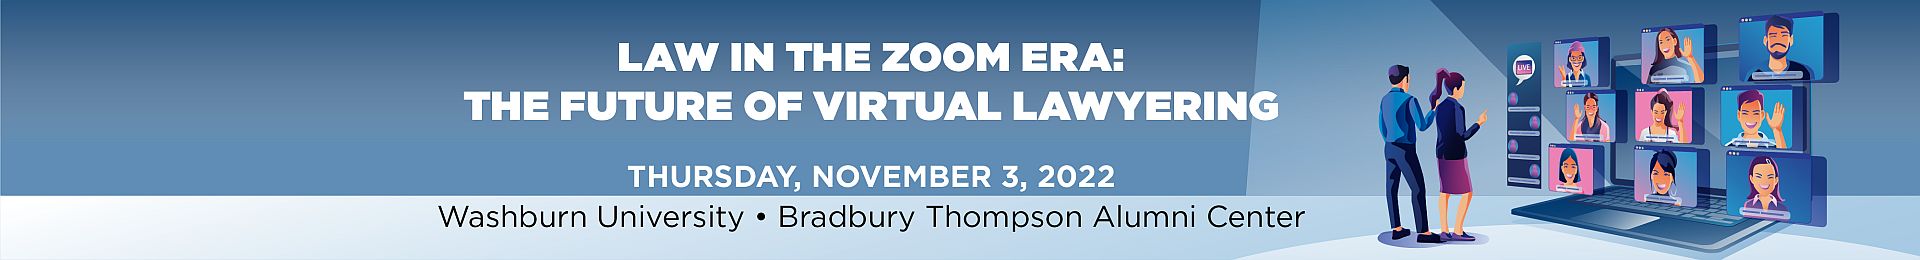 Graphic: Masthead for Law in the Zoom Era symposium.